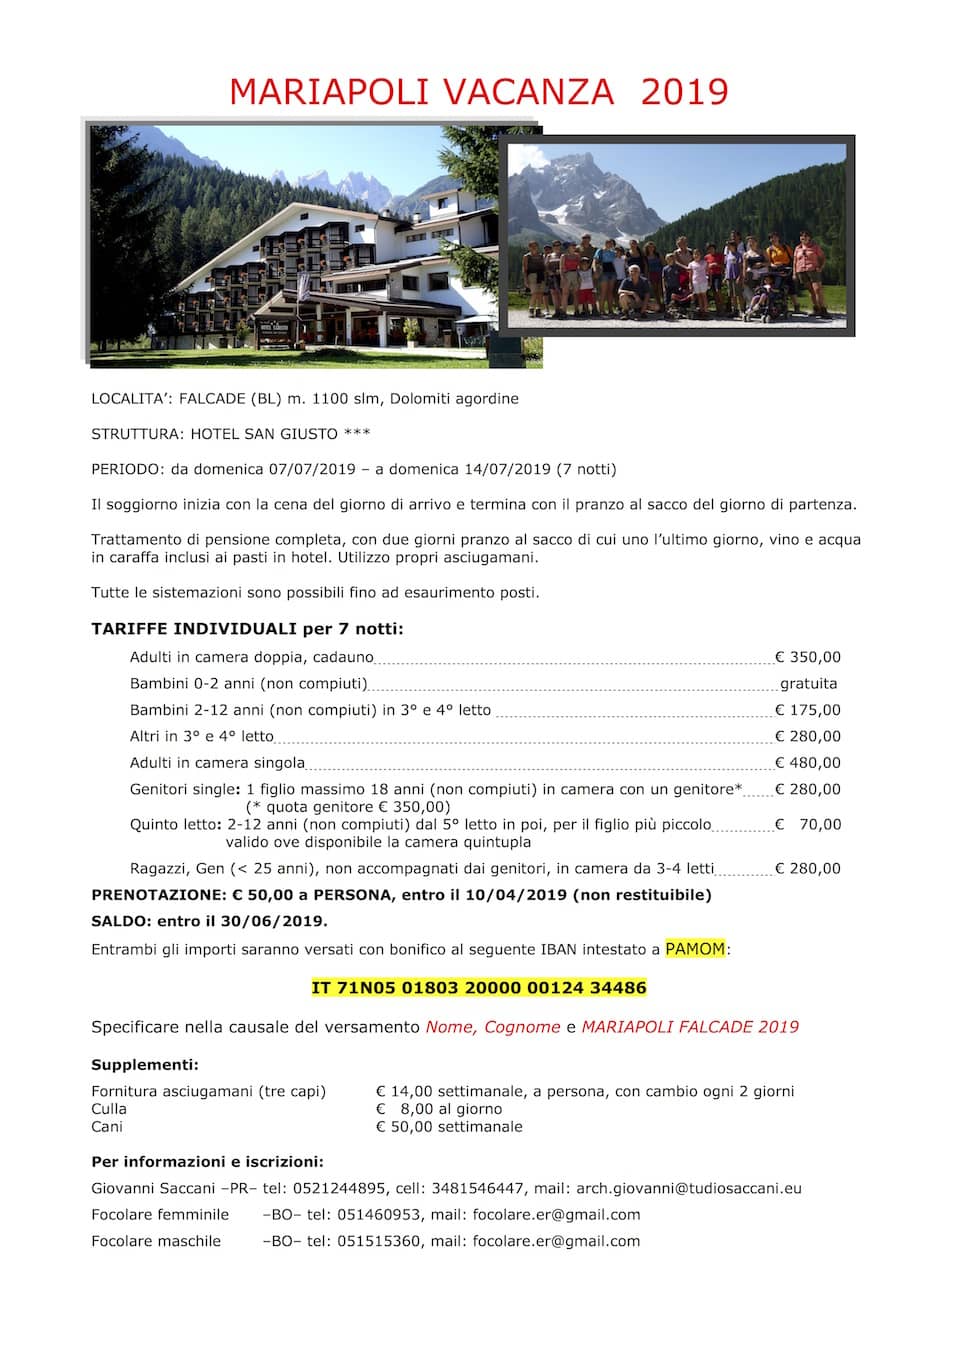 Mariapoli vacanze 2019 - Falcade (BL)